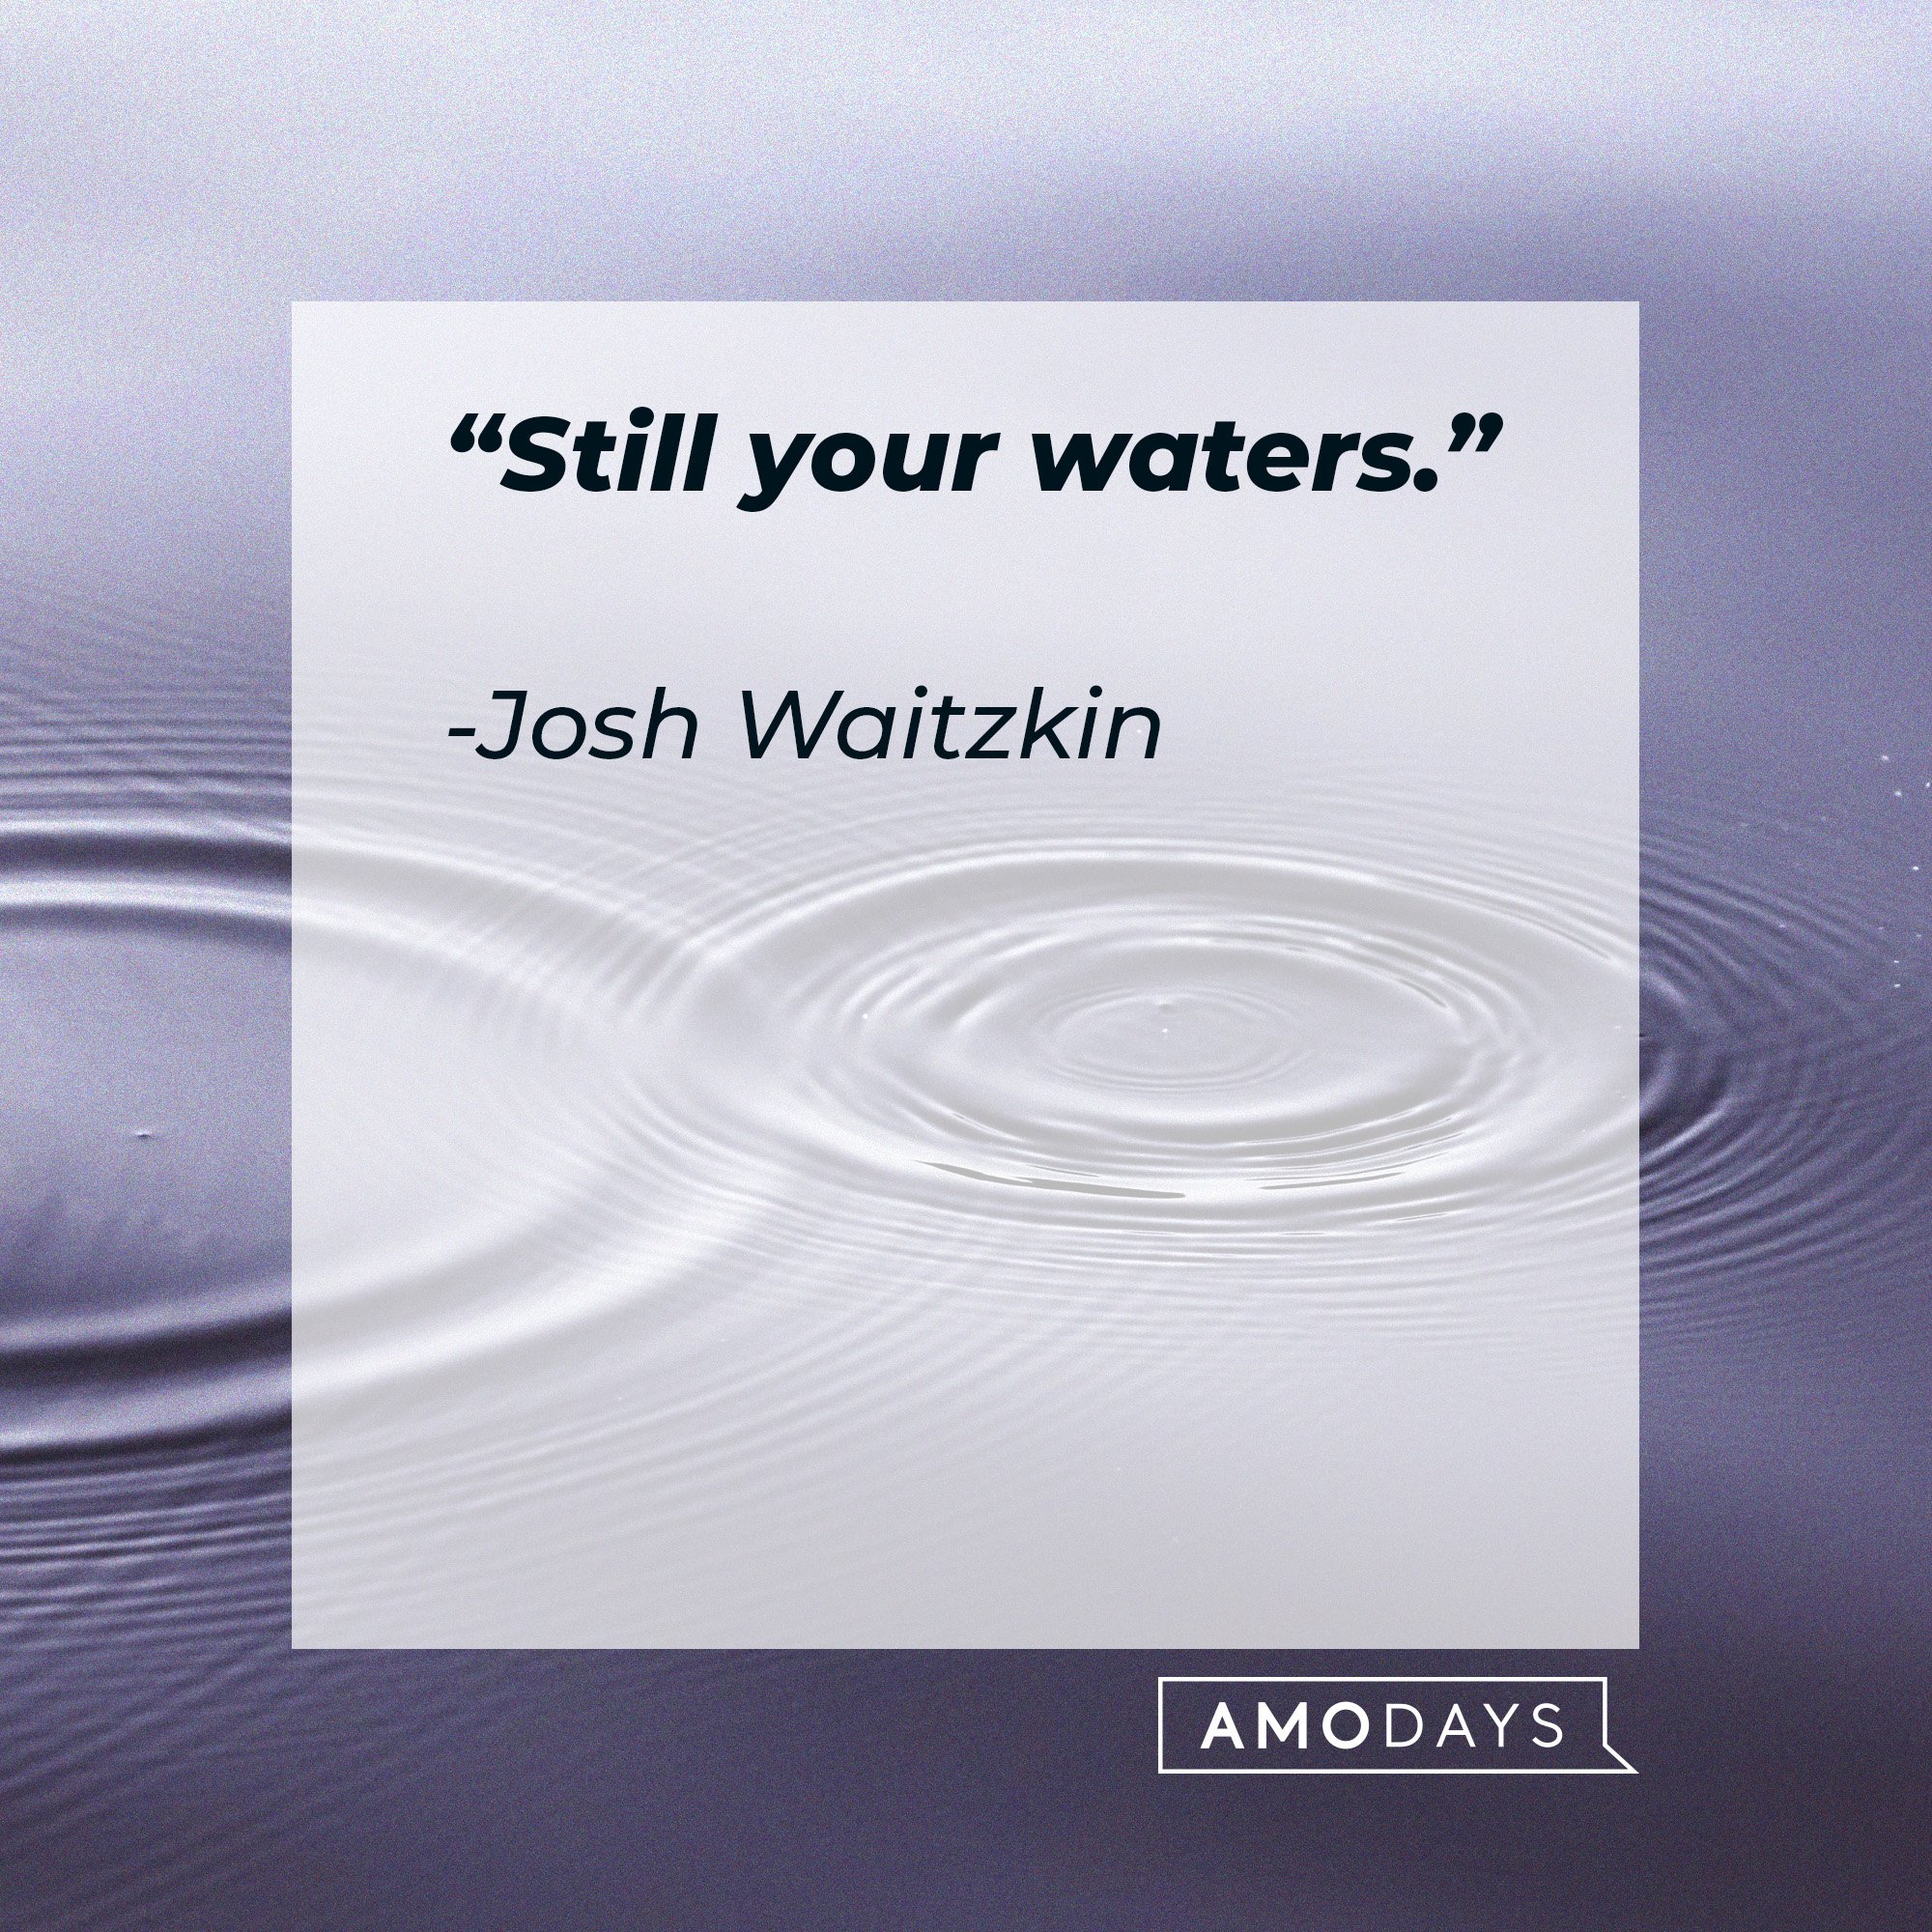 Josh Waitzkin's quote: “Still your waters.” | Image: AmoDays